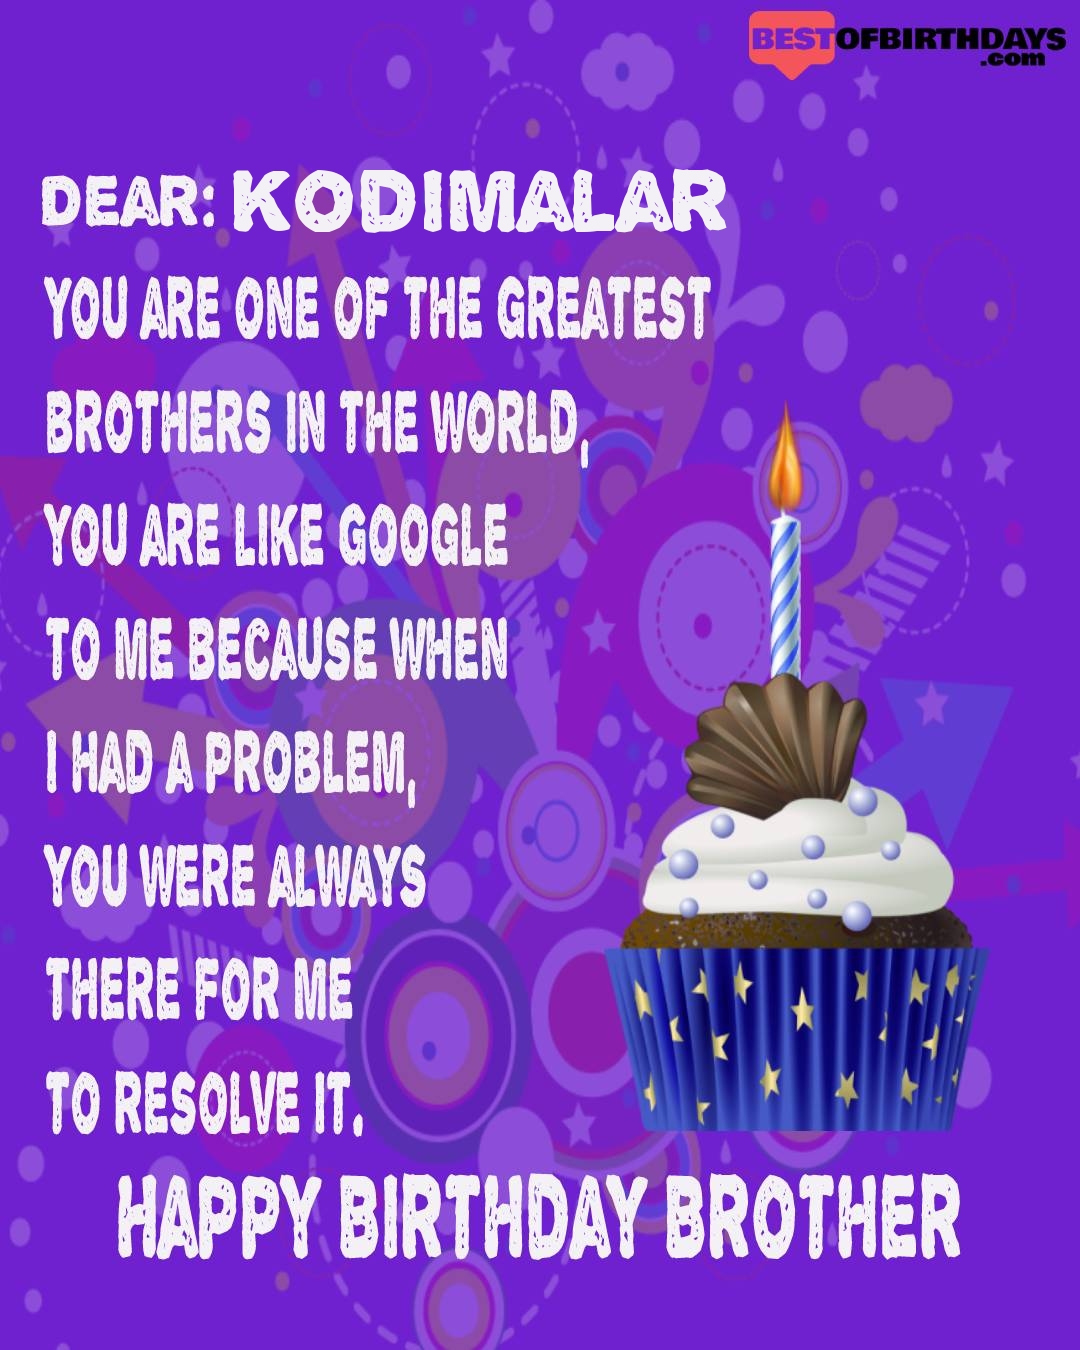 Happy birthday kodimalar bhai brother bro